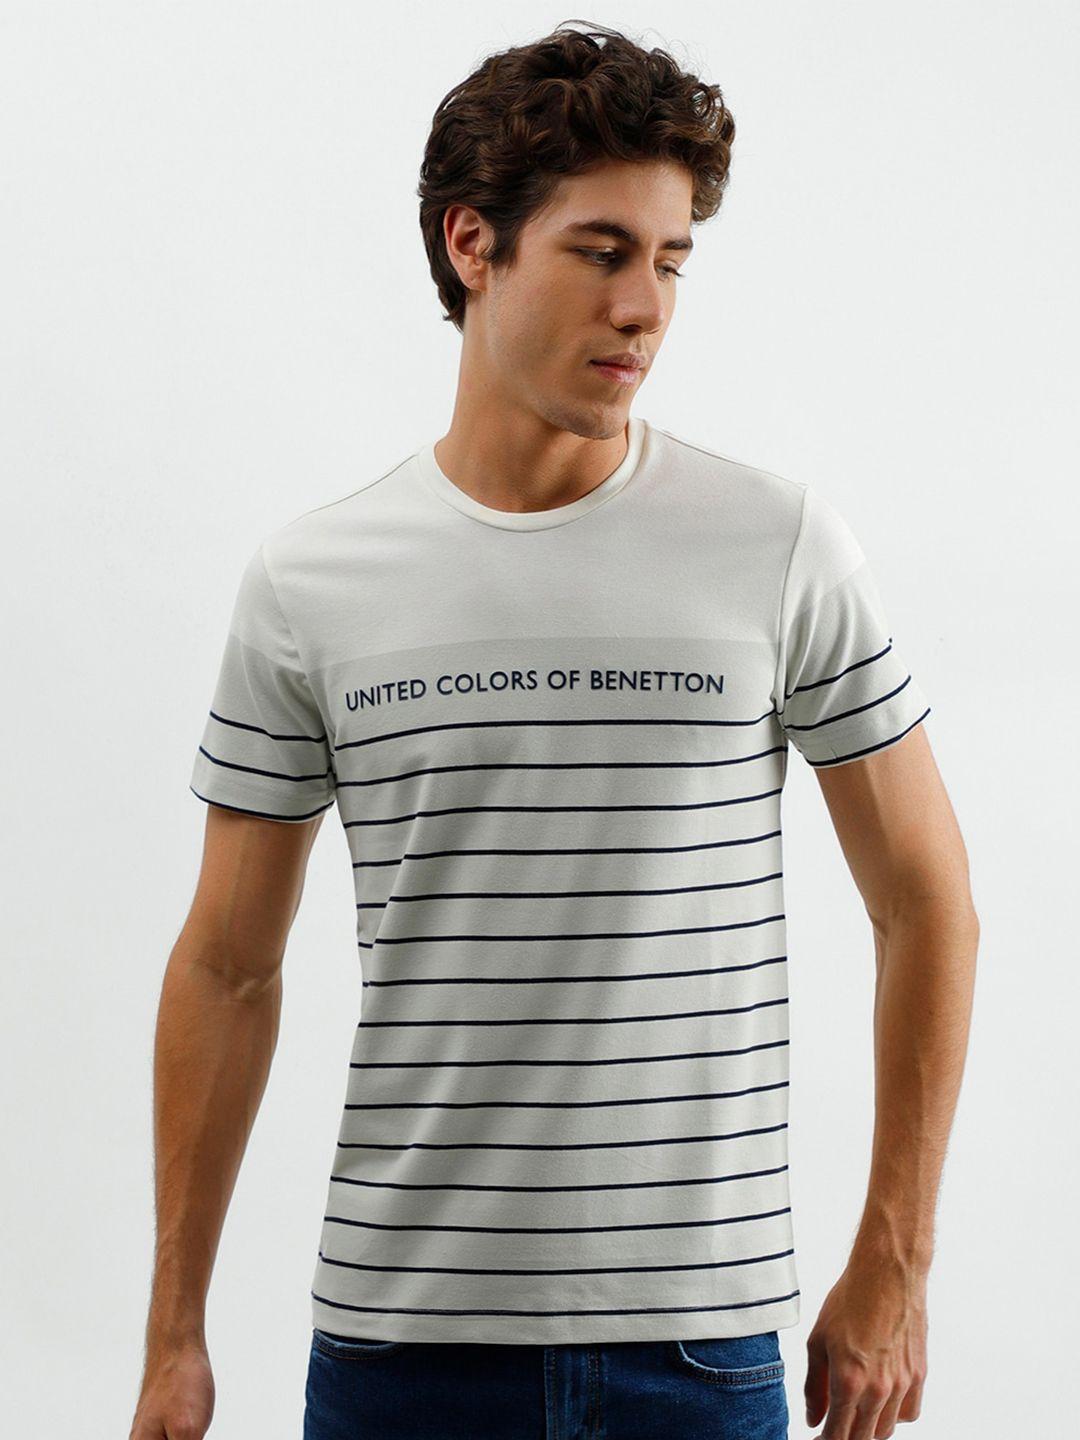 united colors of benetton men grey & black striped t-shirt